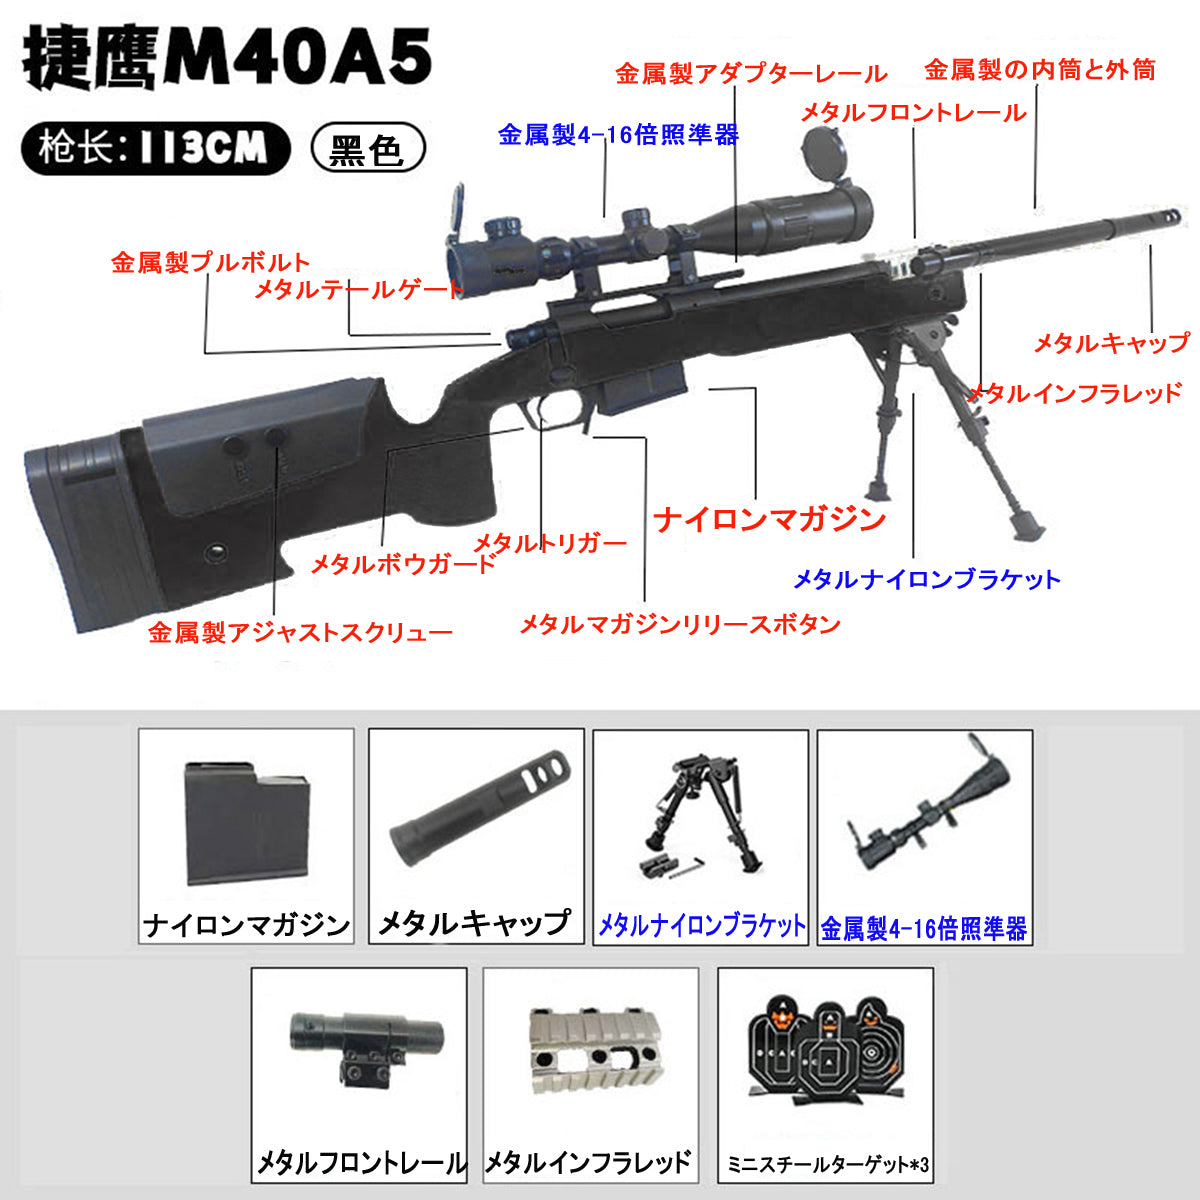 M40A5 JY sniper gun-style toy gun, shell-exhausting sniper rifle, bolt-action bullpup rifle